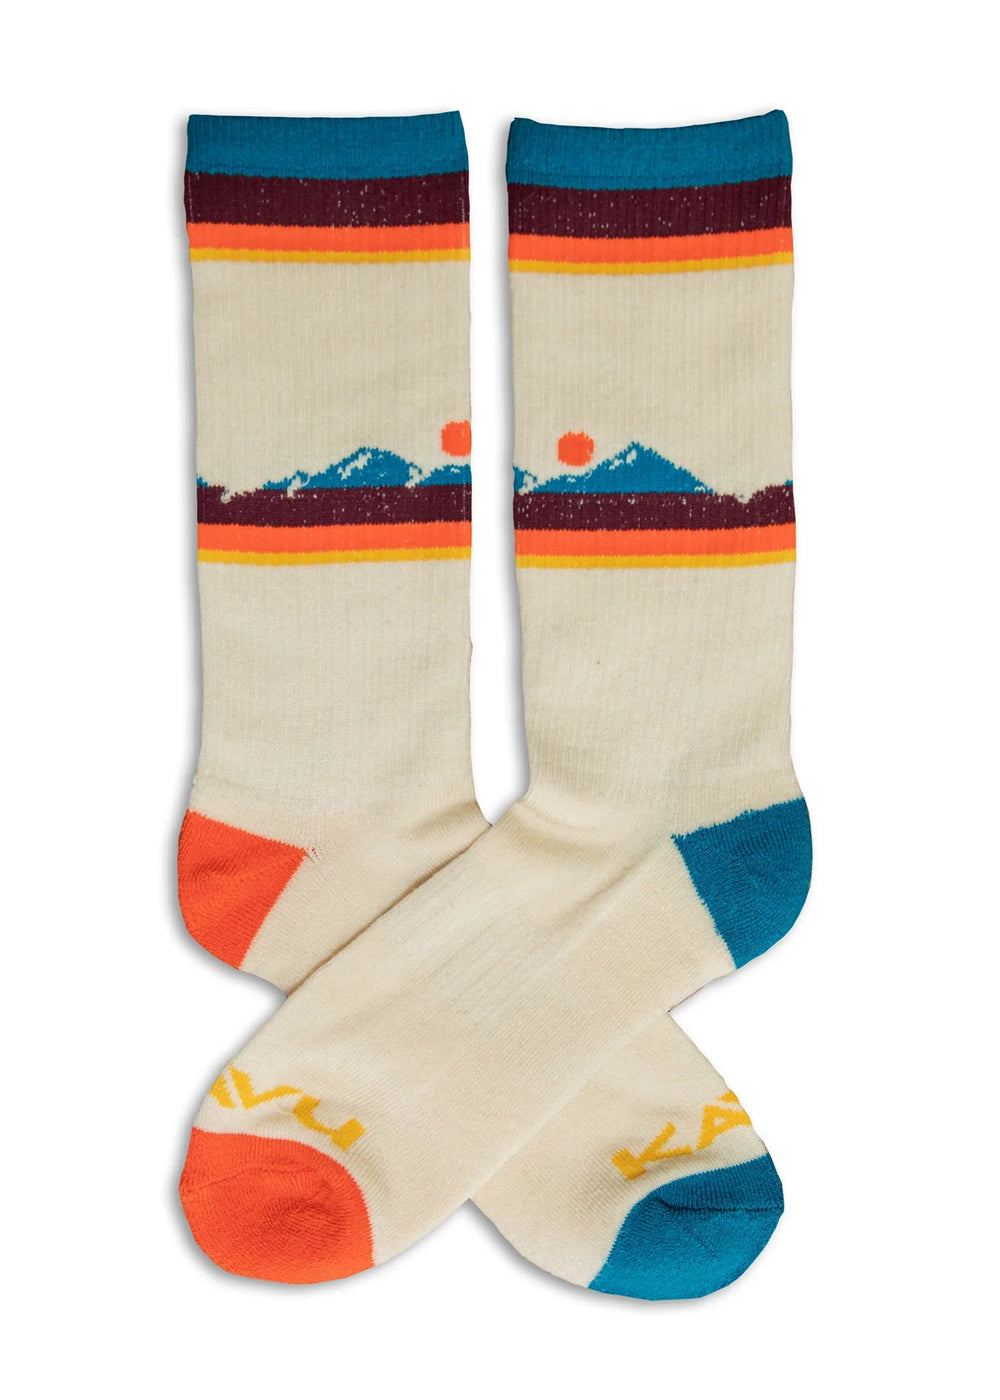 Moonwalk Socks - Idaho Mountain Touring